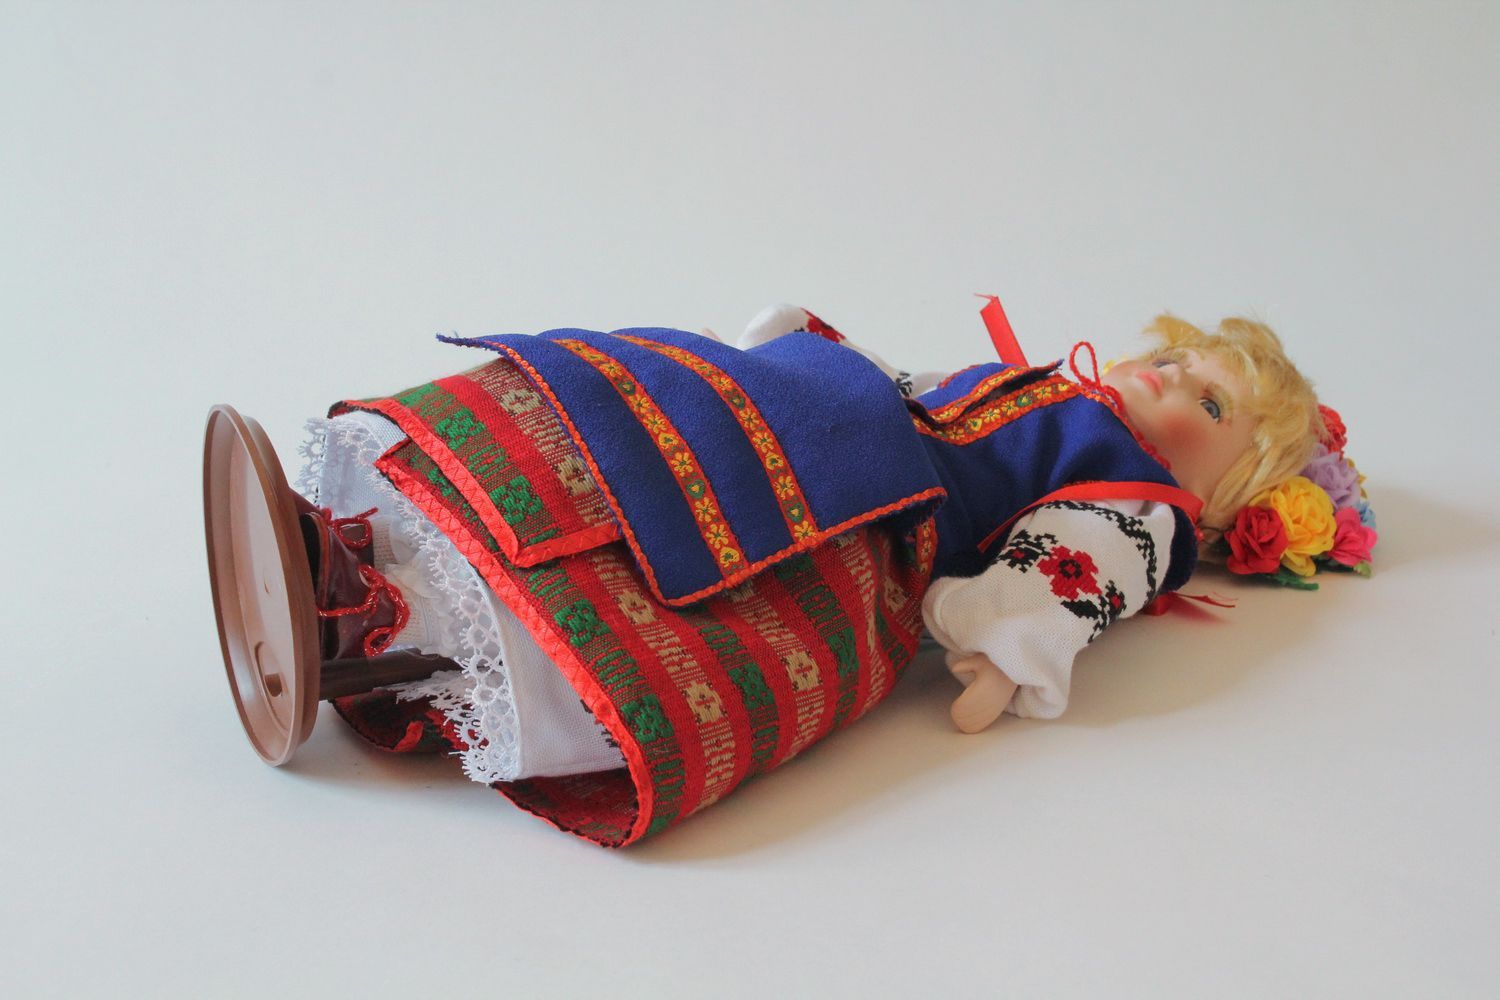 Muñeca artesanal en el traje tradicional foto 1